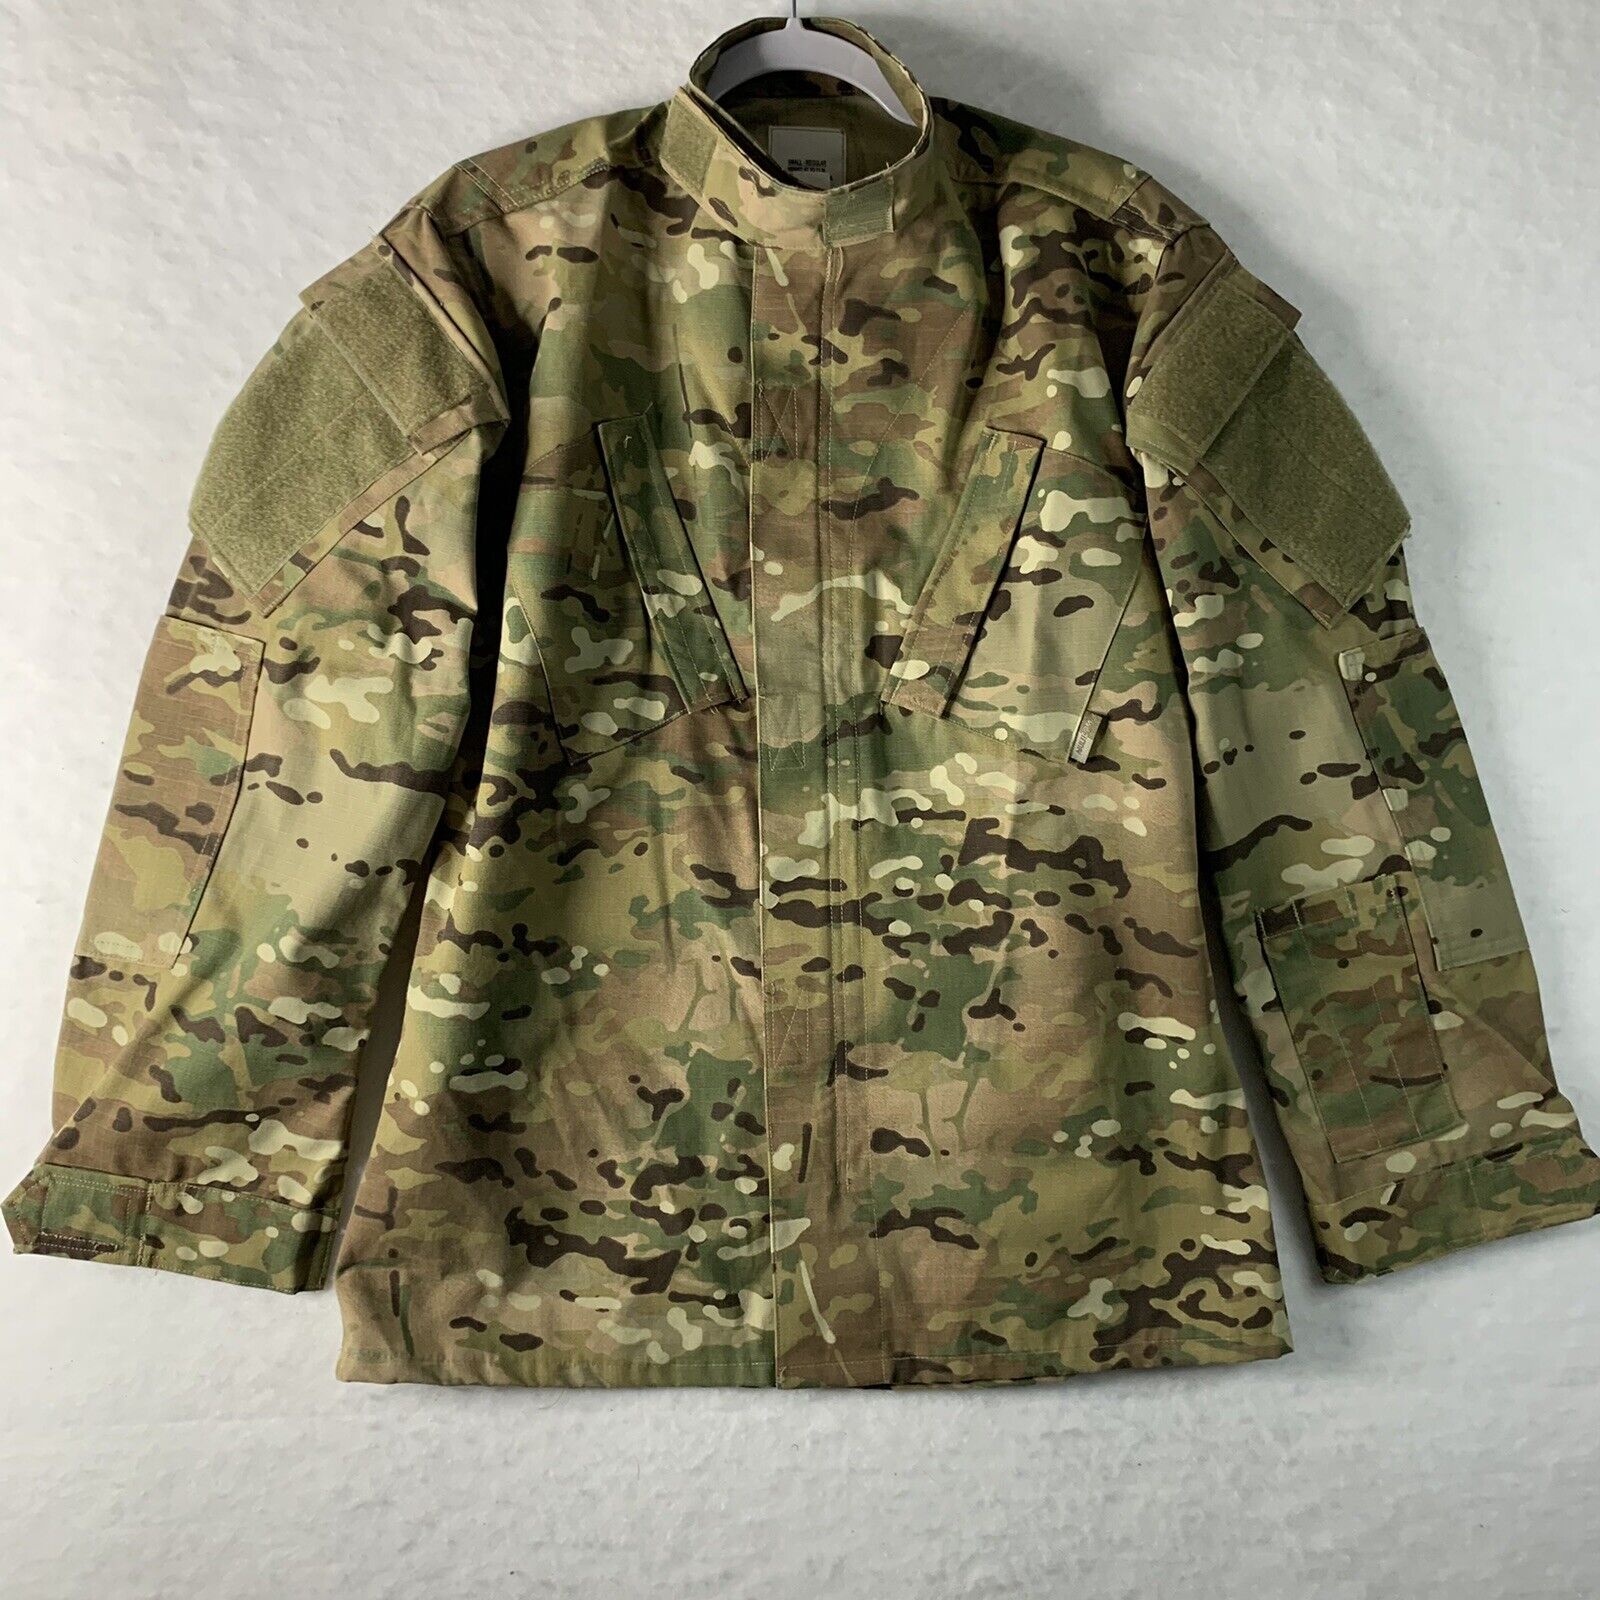 NWOT Military Army Combat Uniform Proper Jacket Multicam Small Regular